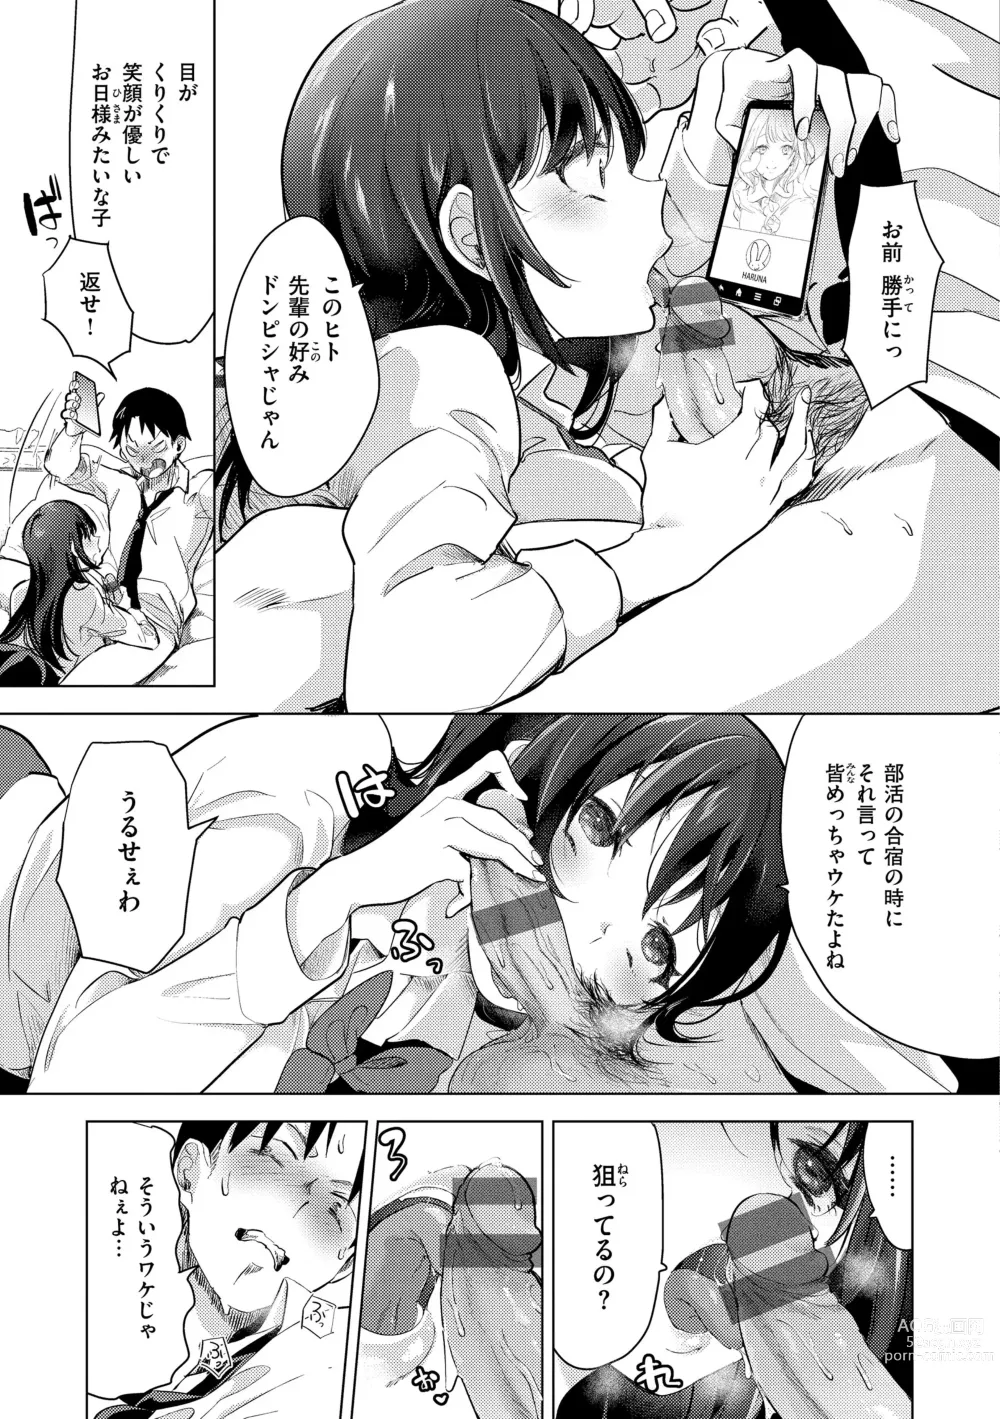 Page 9 of manga Koishite Furete - Loving and Touching